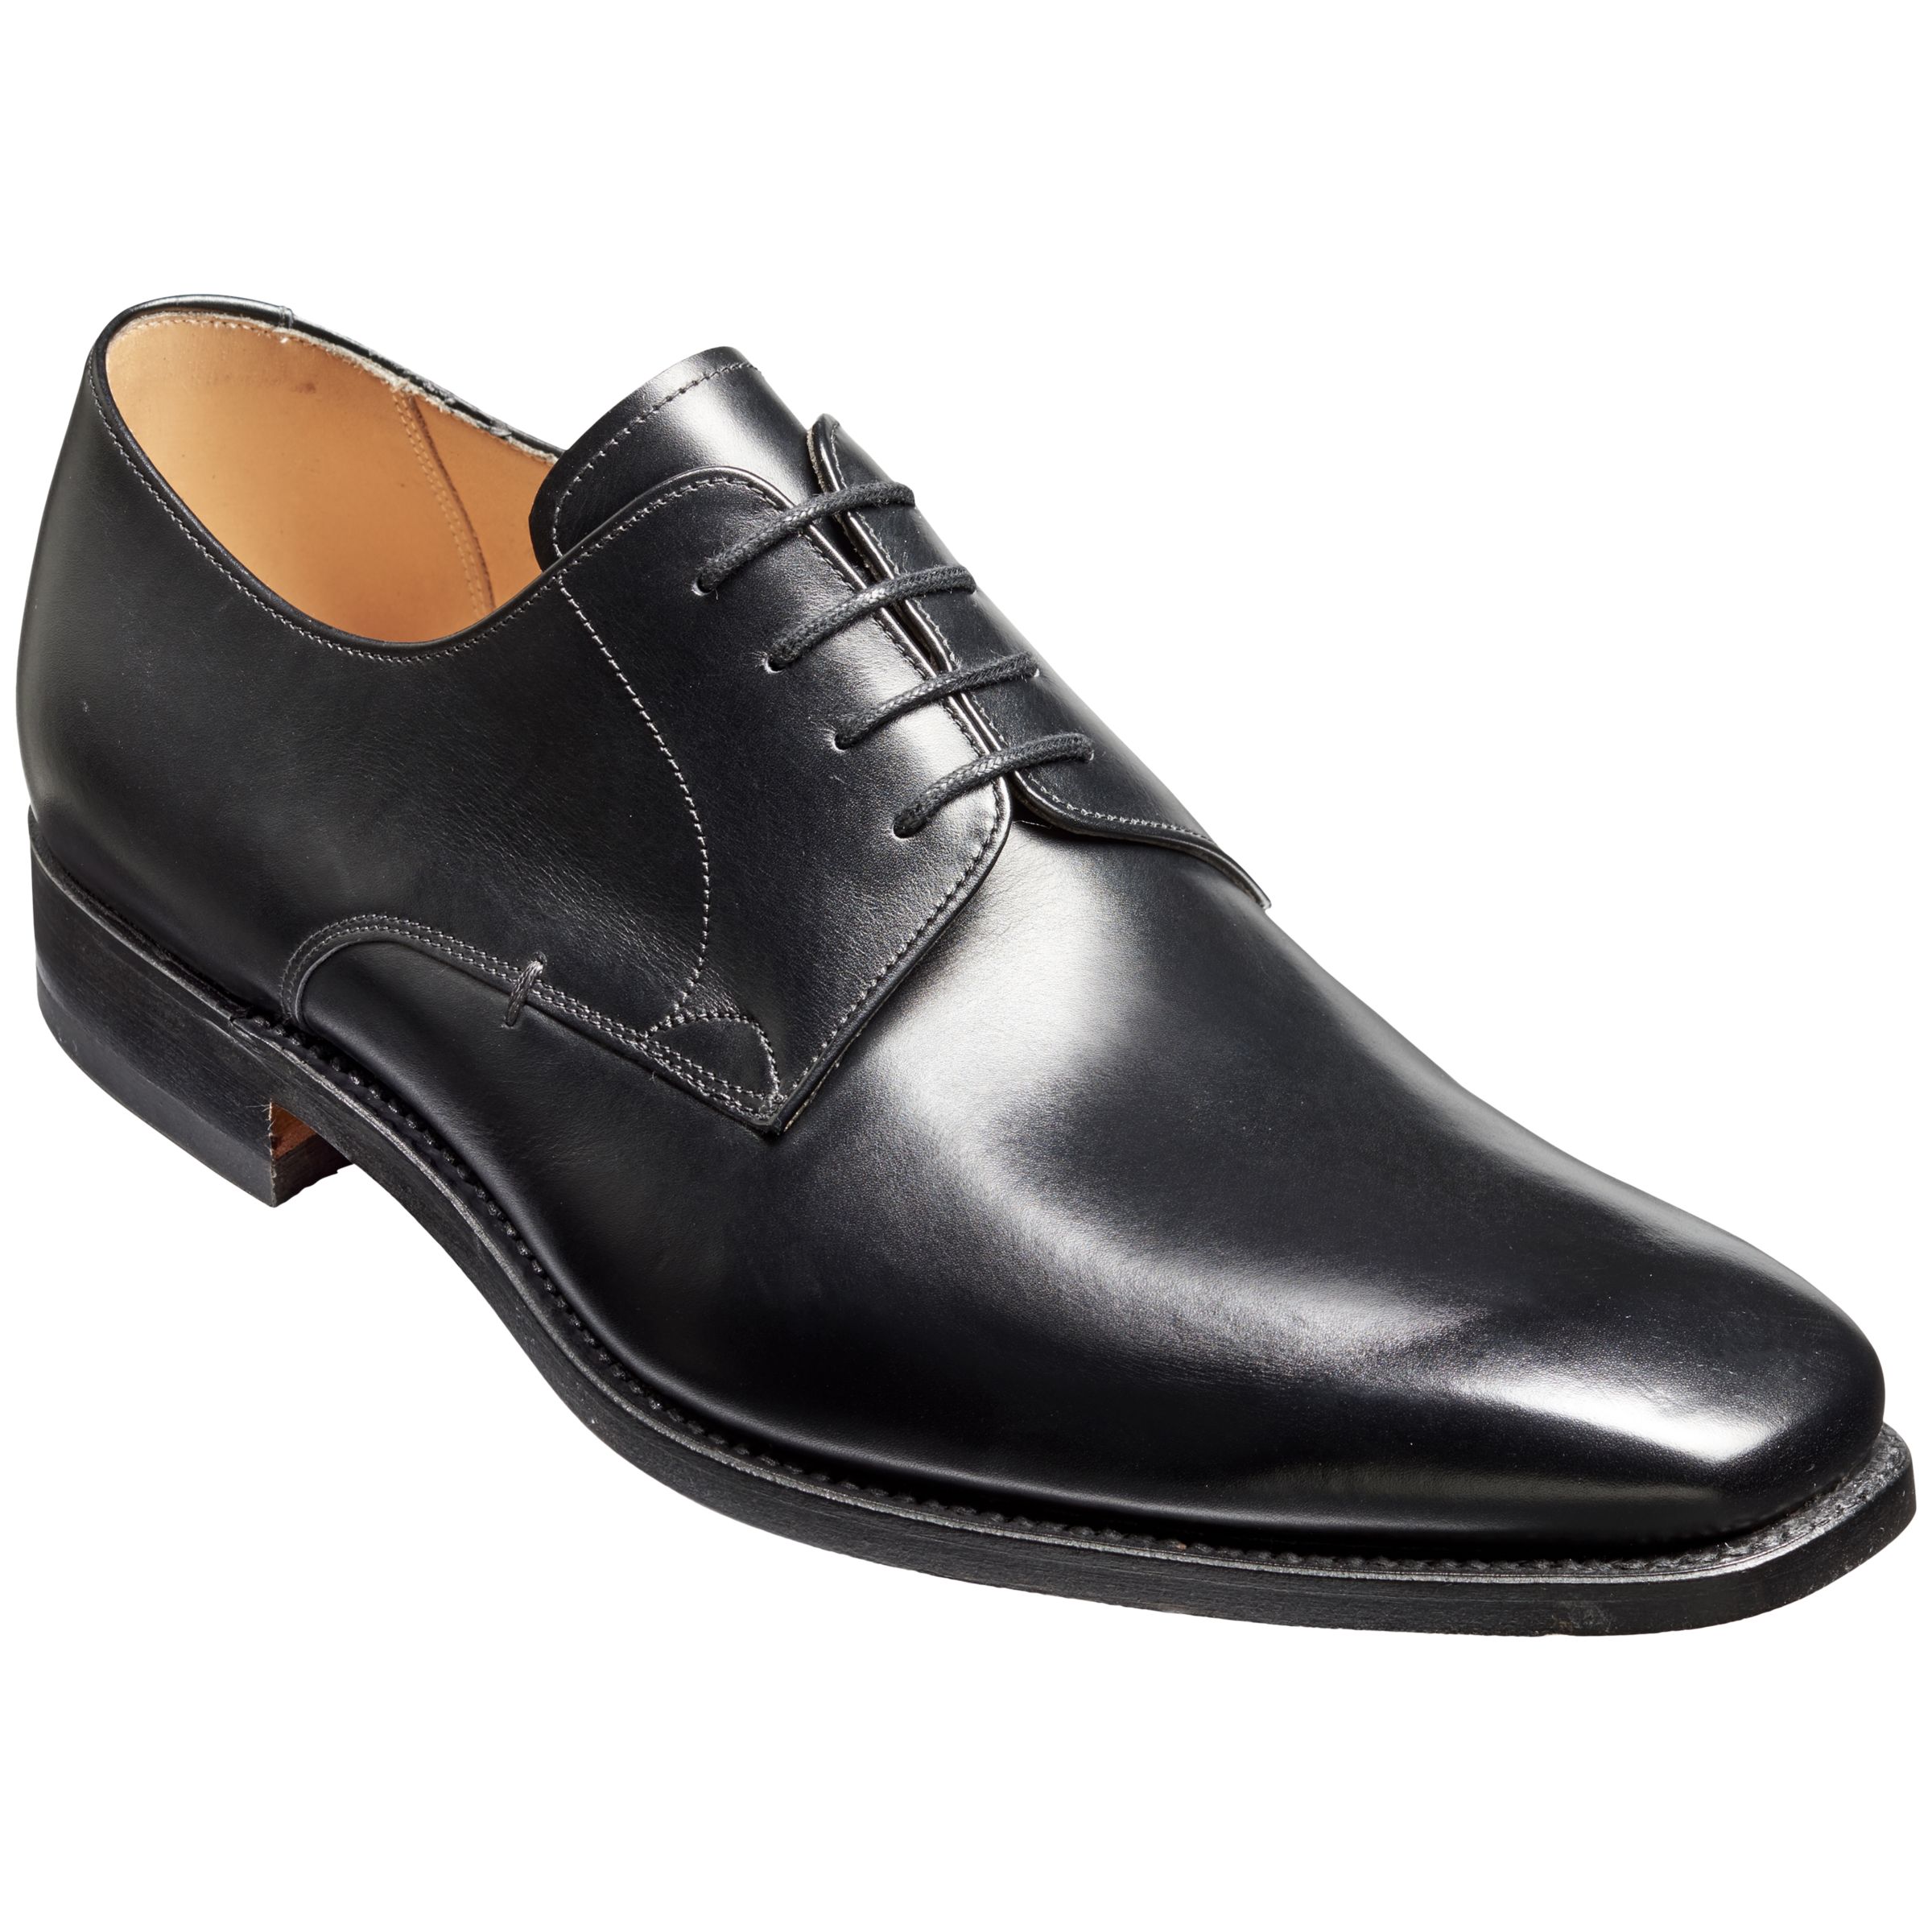 Barker Lyle Goodyear Welt Leather Derby Shoes, Black at John Lewis